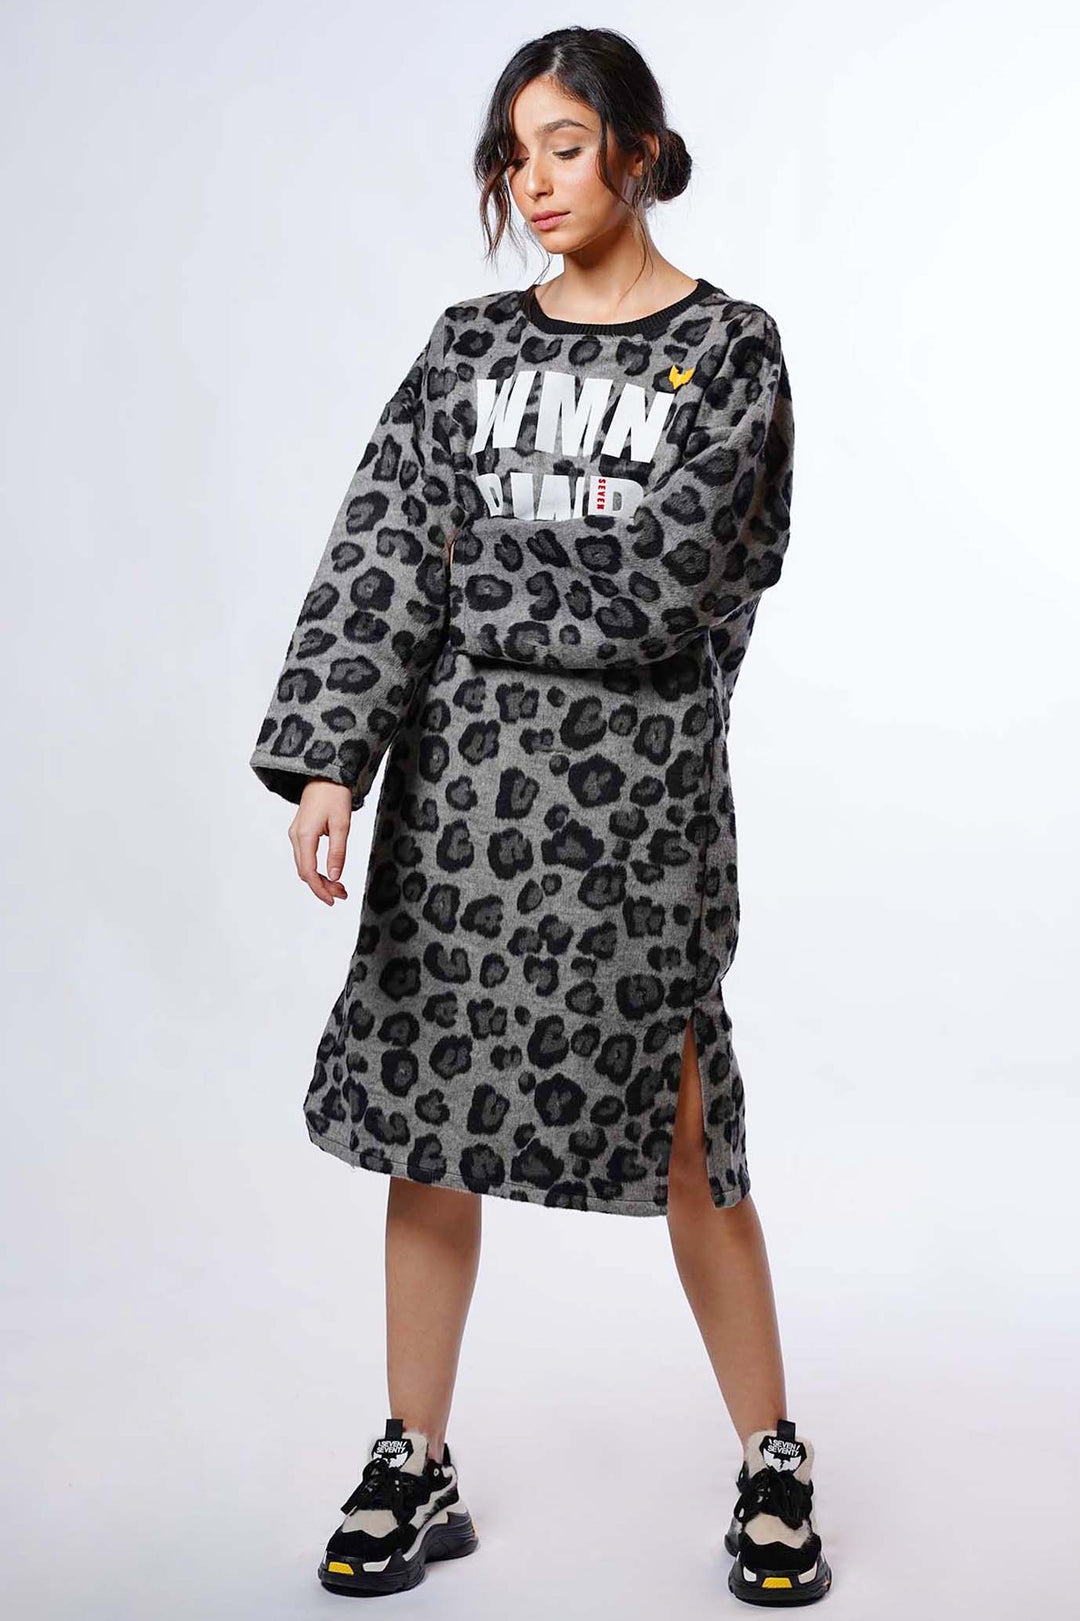 Black and grey leopard dress | Runway Secrets